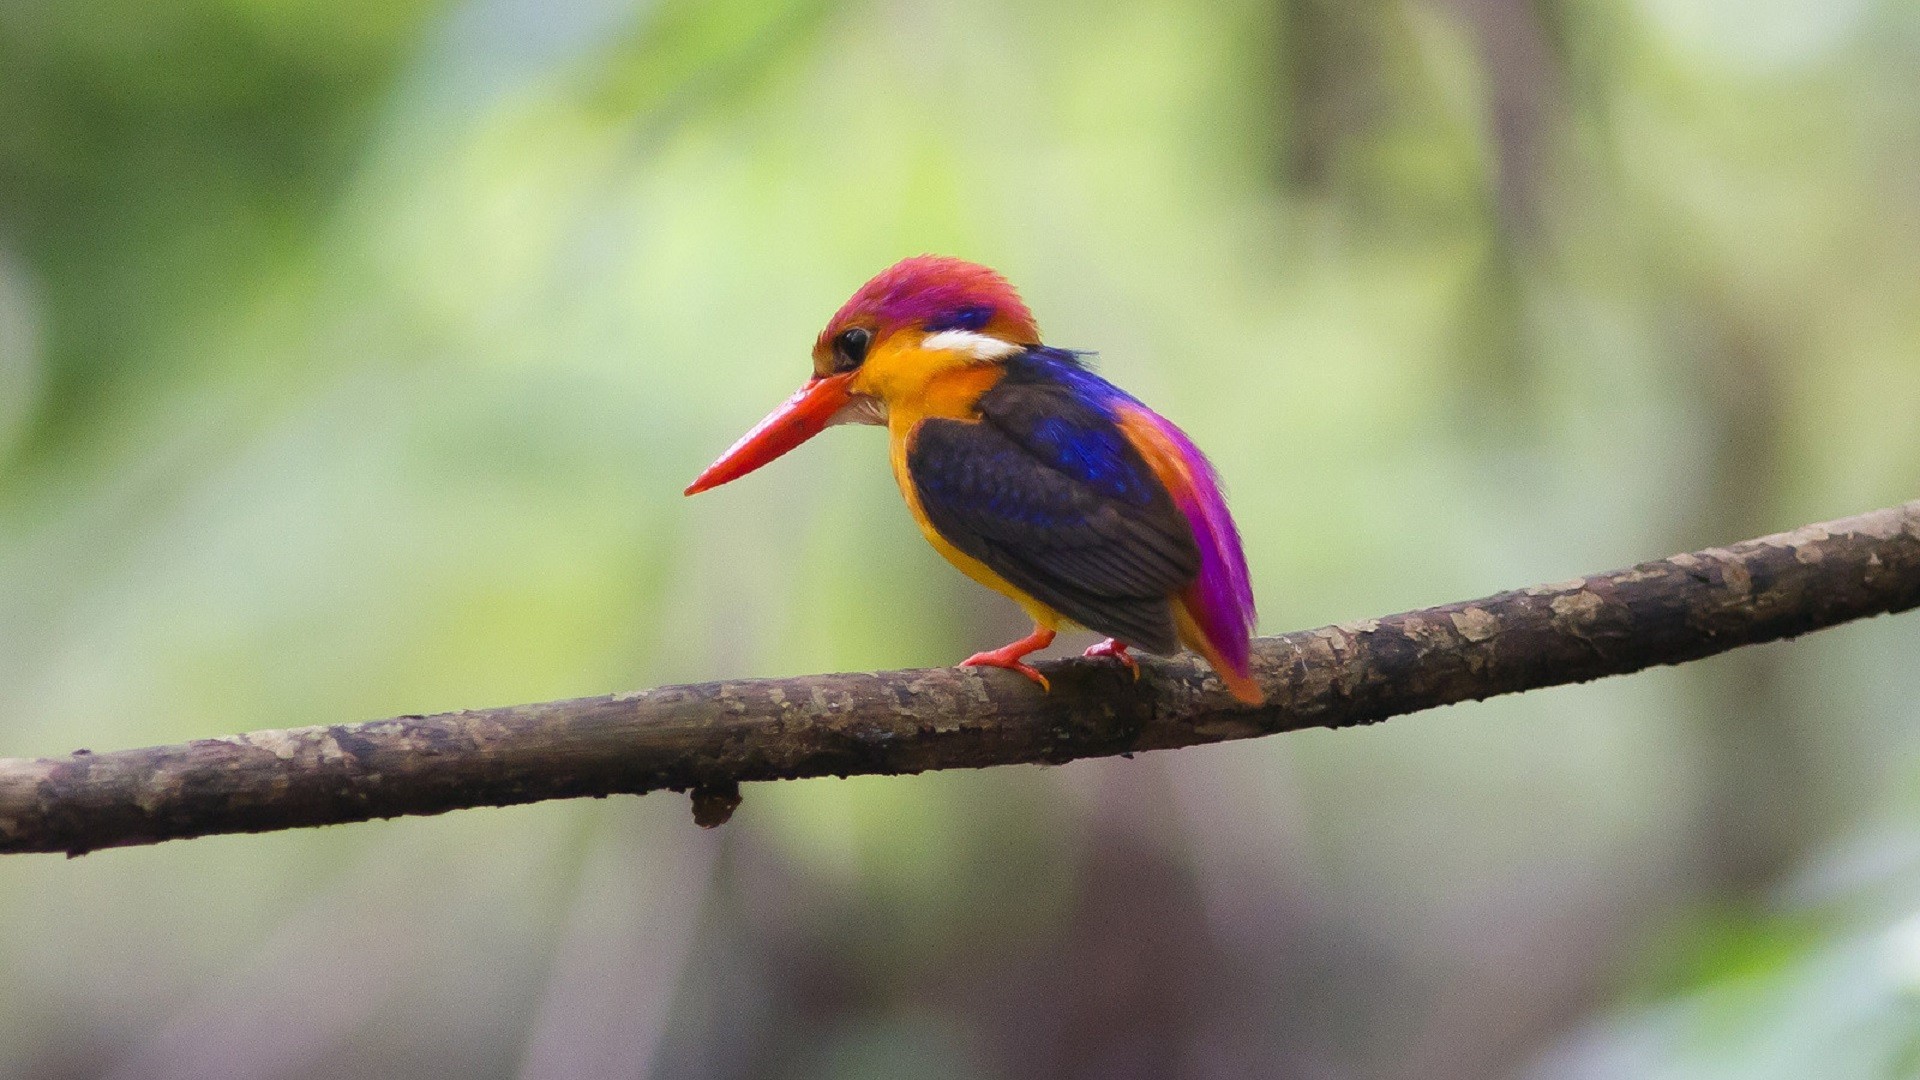 animals-birds-creatures-kingfisher-rare-2797027-1920x1080.jpg